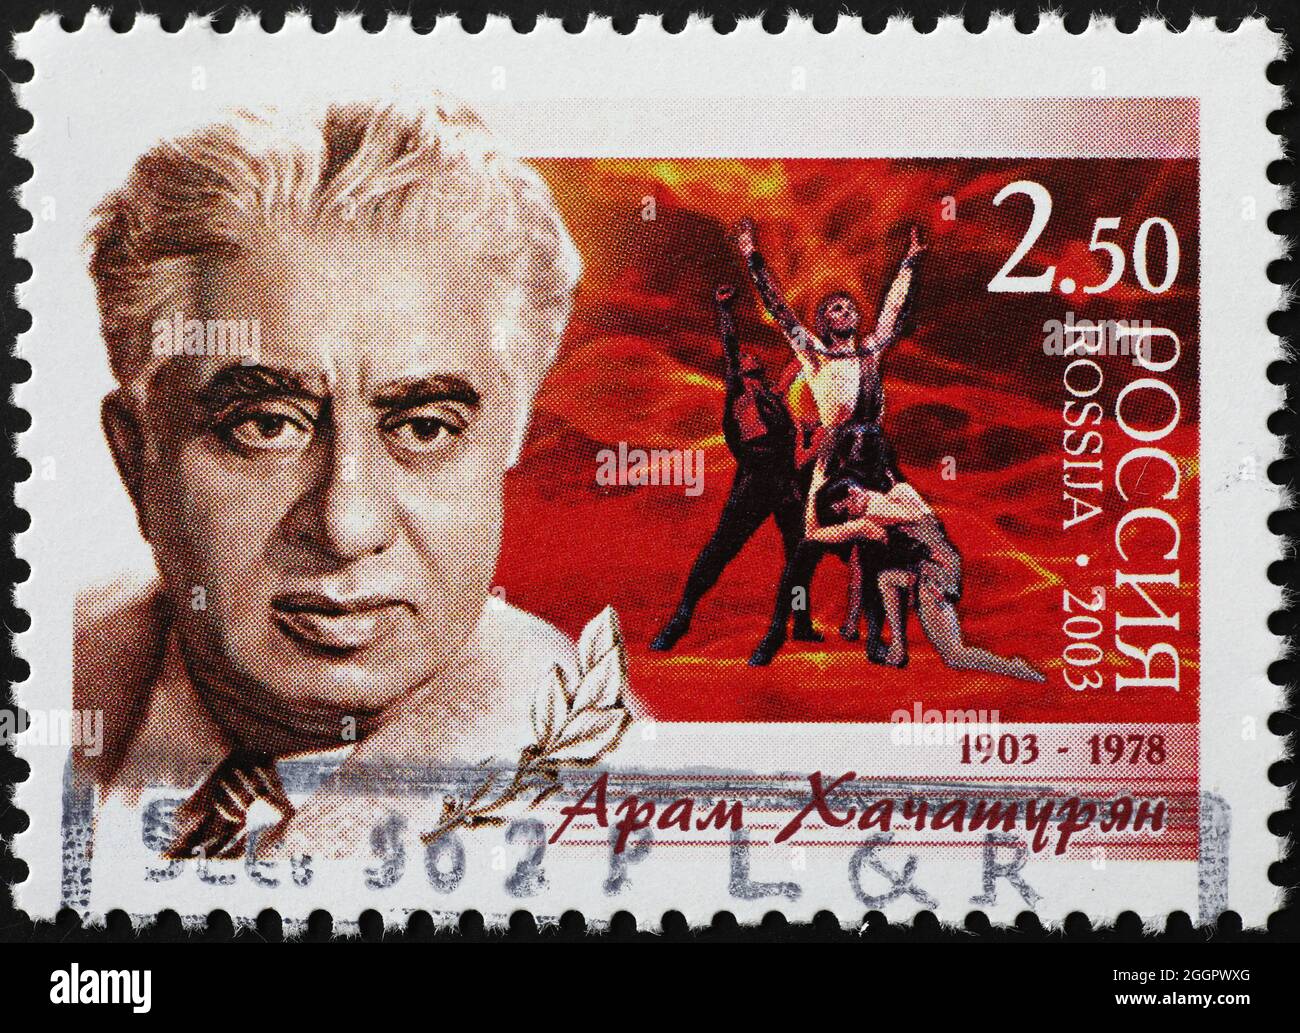 Portrait of Aram Khachaturian on postage stamp Stock Photo